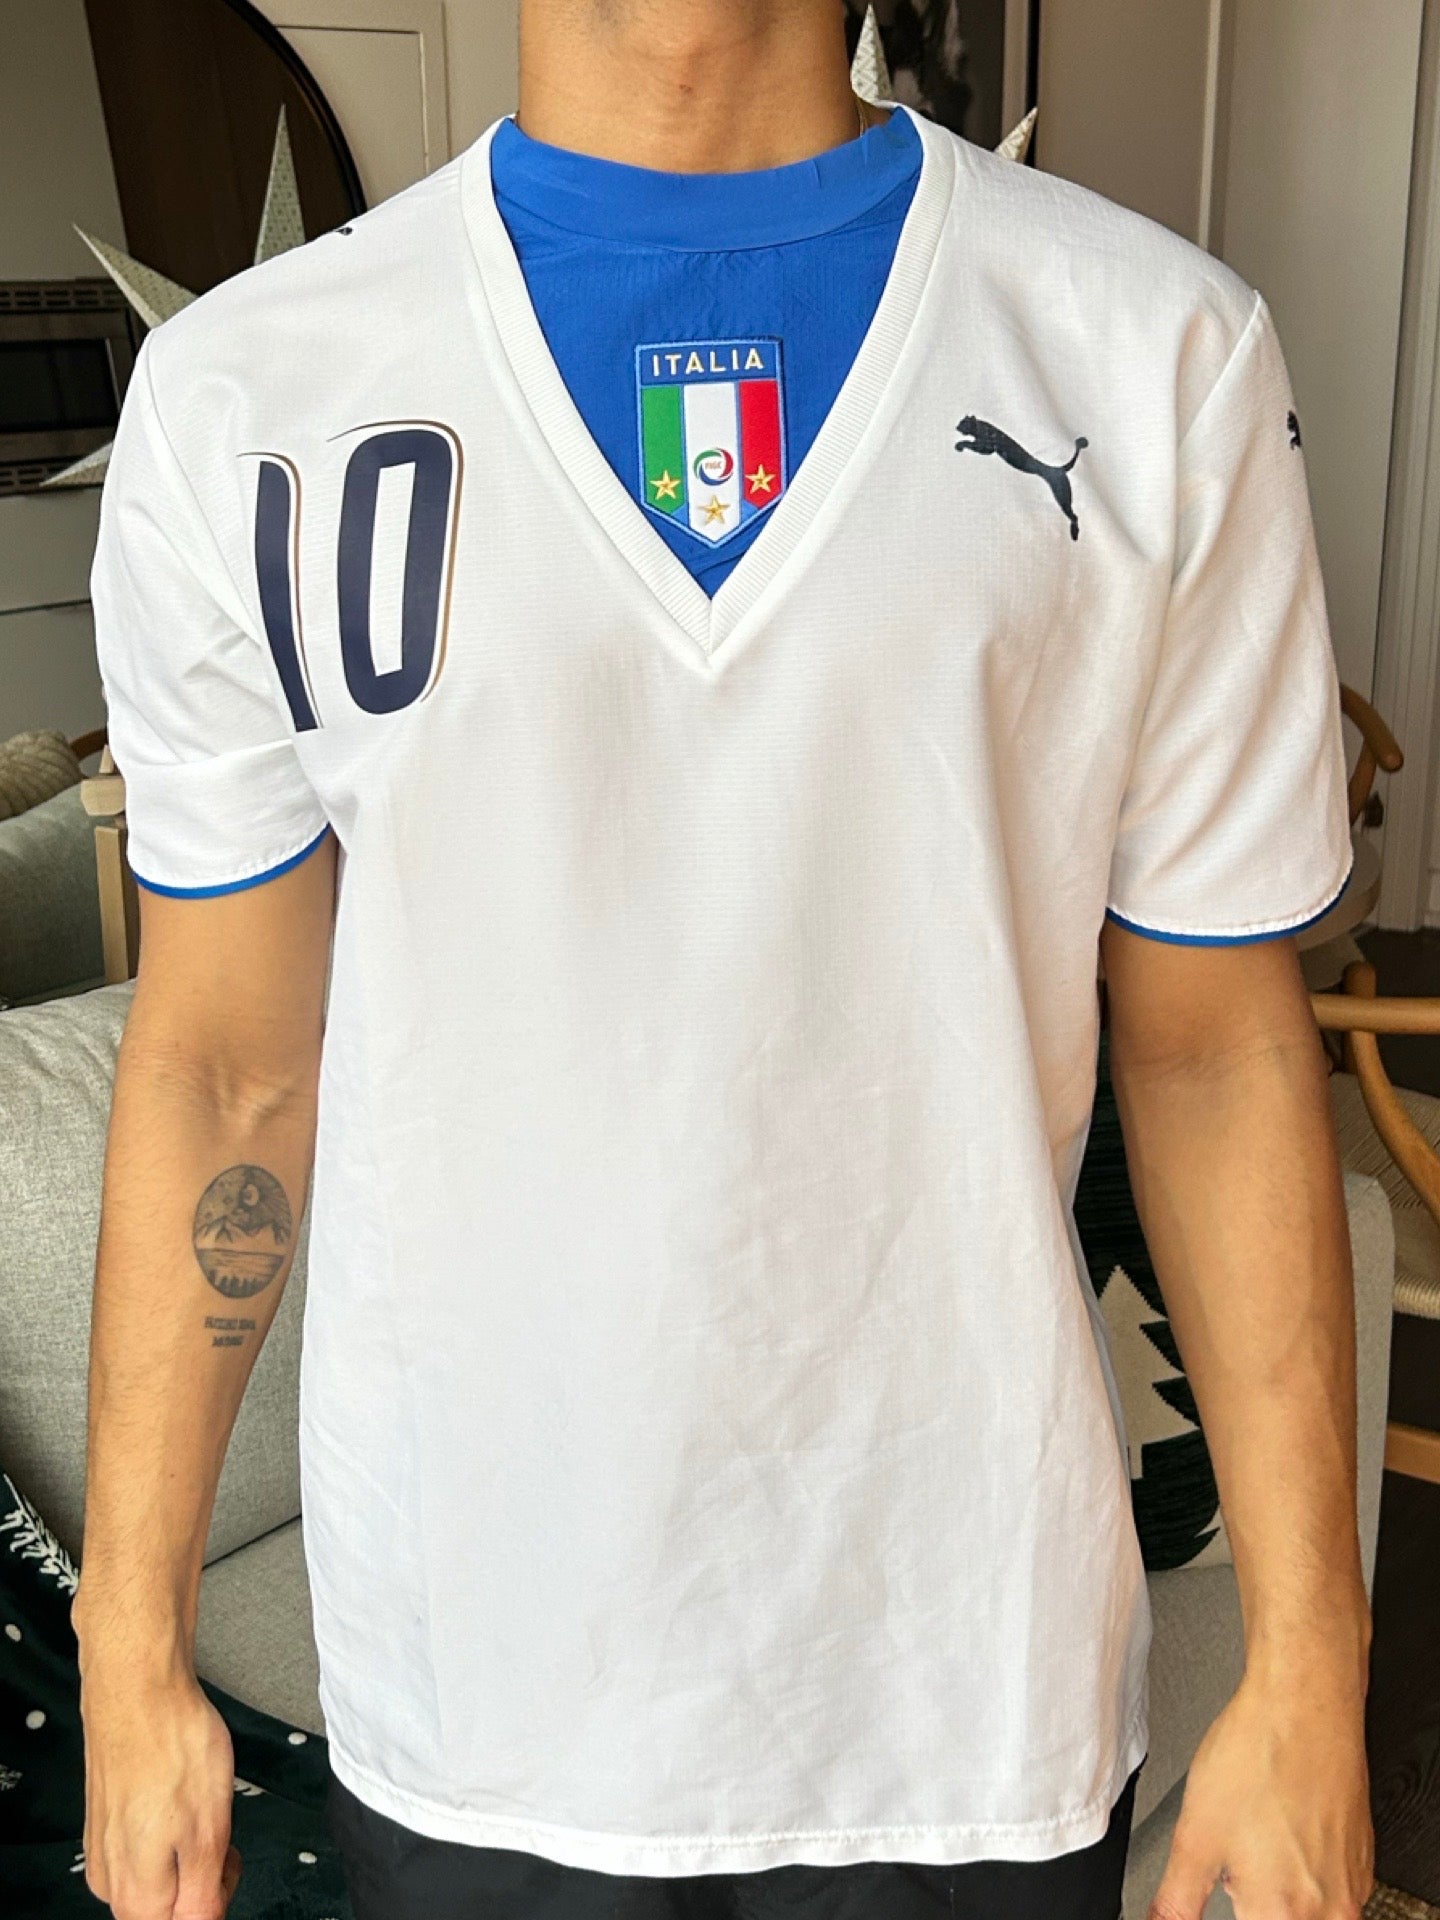 Italy National Team 2006 World Cup Away shirt, #10, Francesco Totti - S